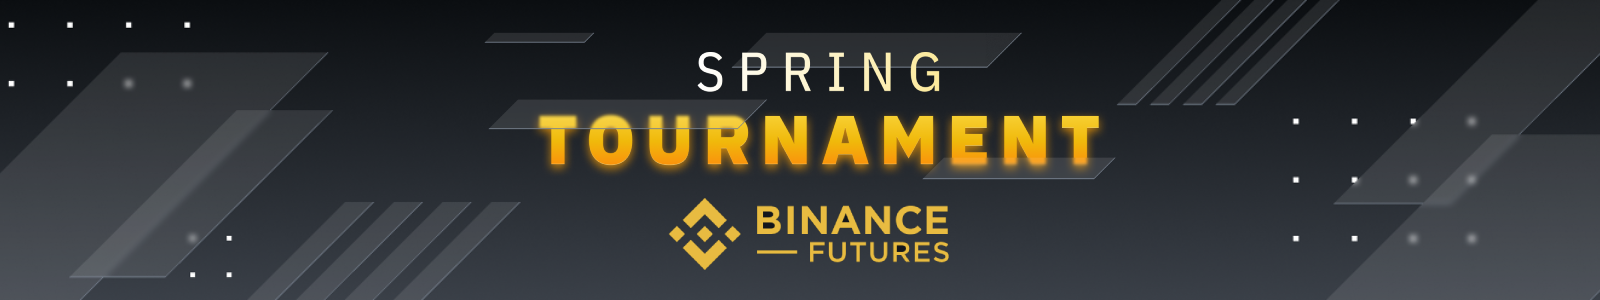 Binance Futures Spring Tournament